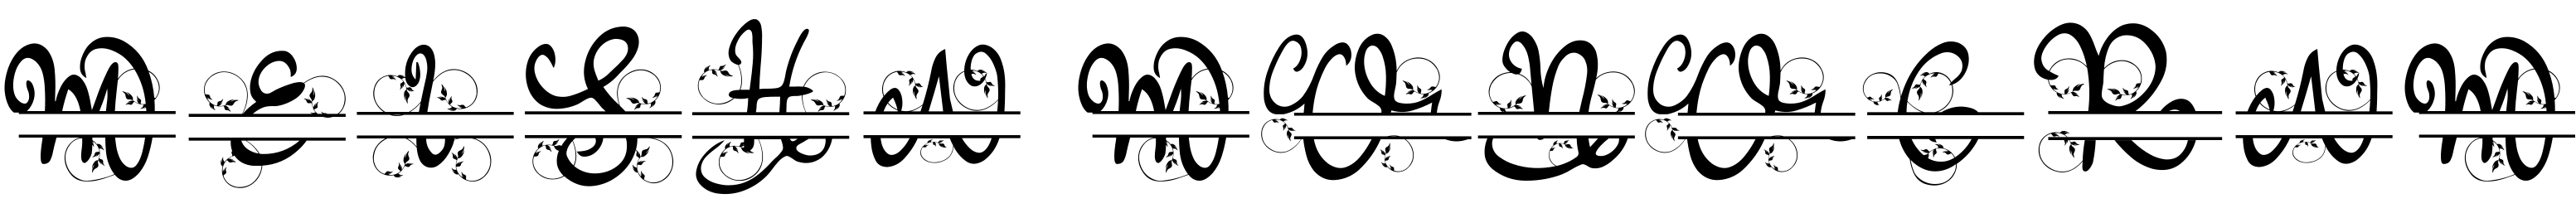 Meisha Monogram